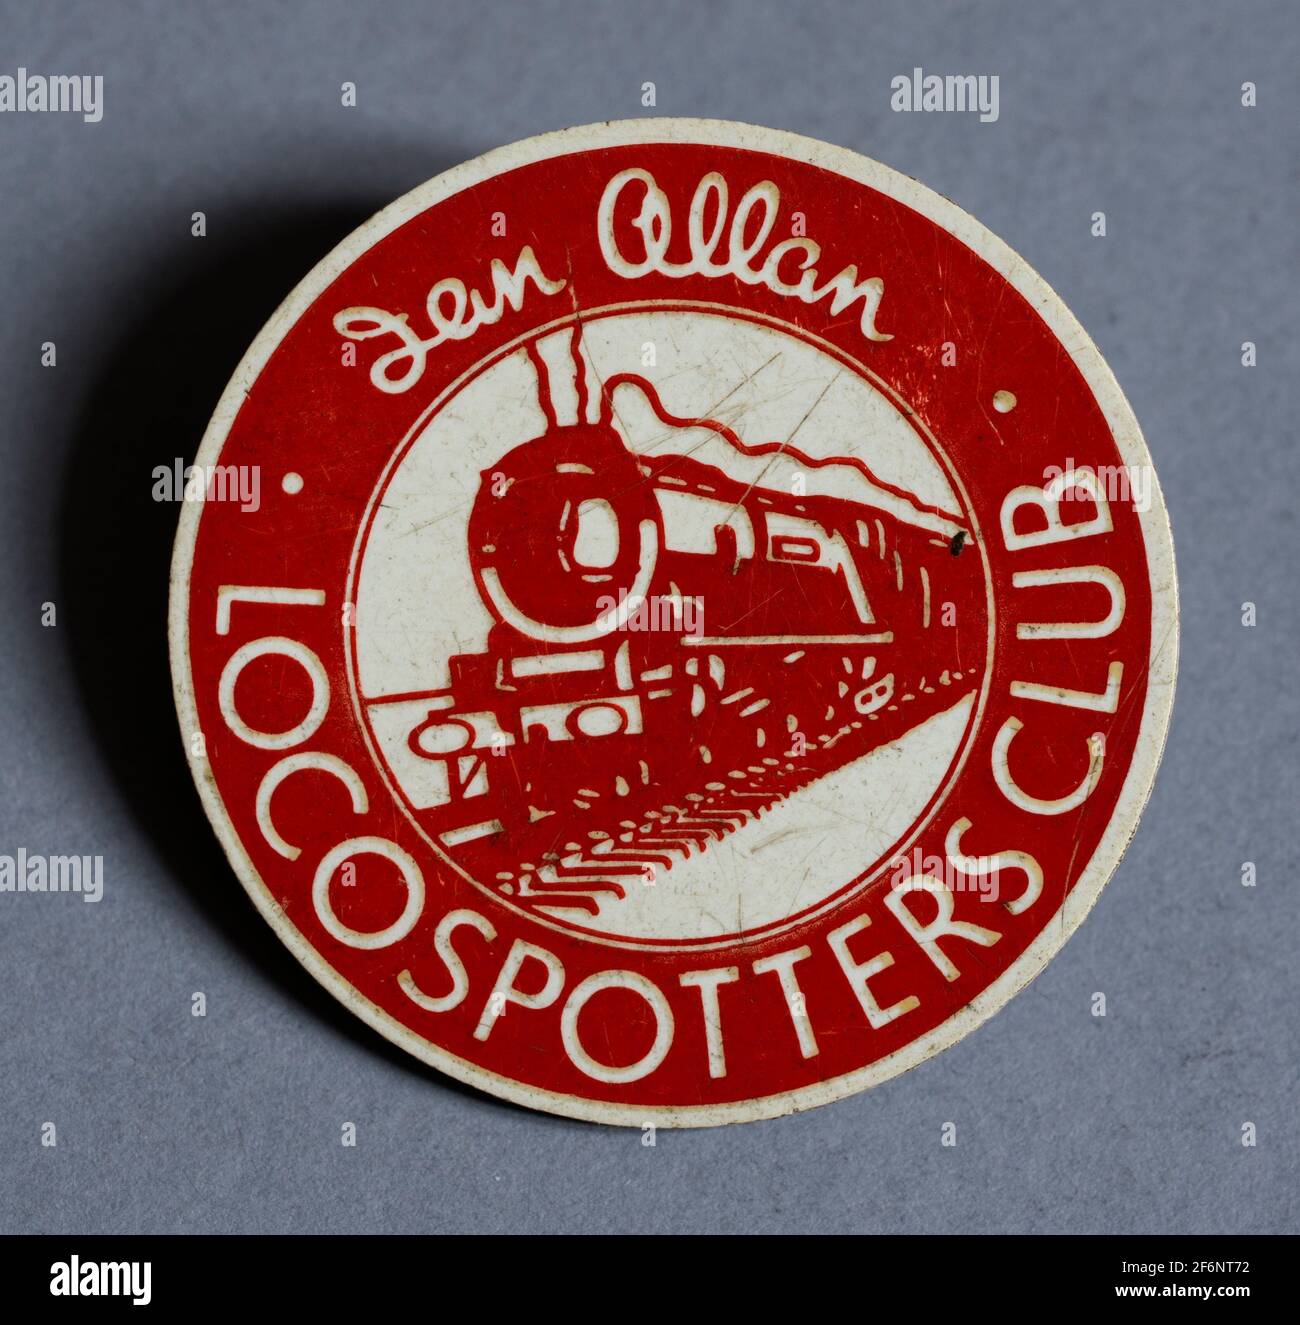 Ian Allan Locospotters Club plastic badge, London Midland region. Stock Photo